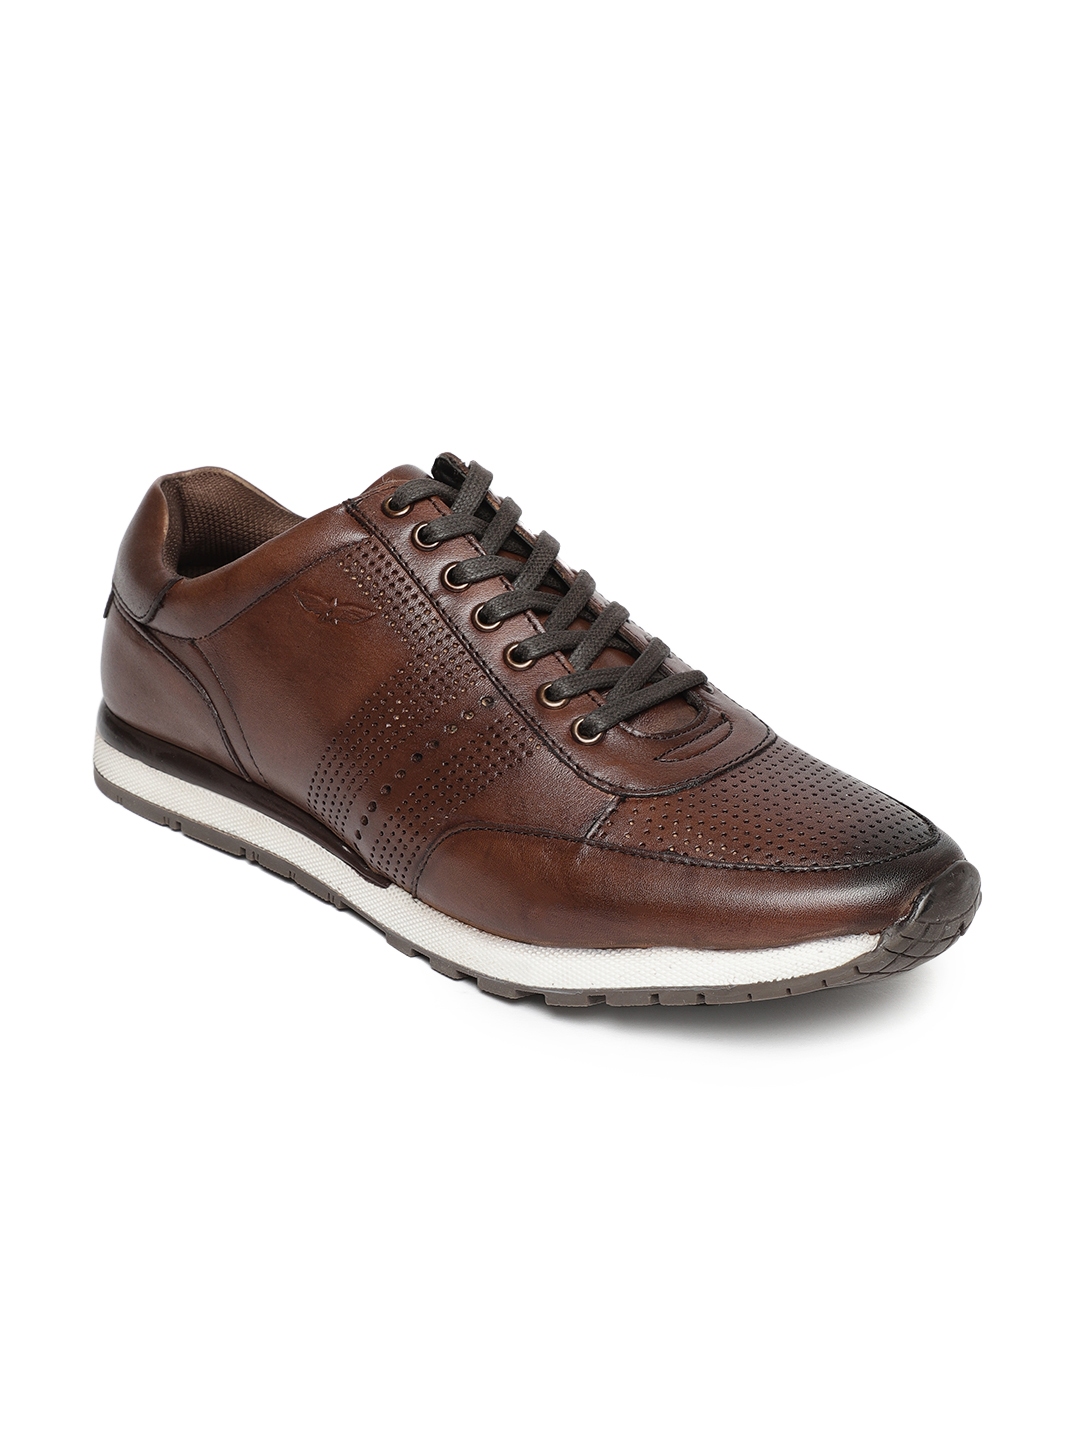 Buy Park Avenue Men Brown Sneakers - Casual Shoes for Men 8943807 | Myntra